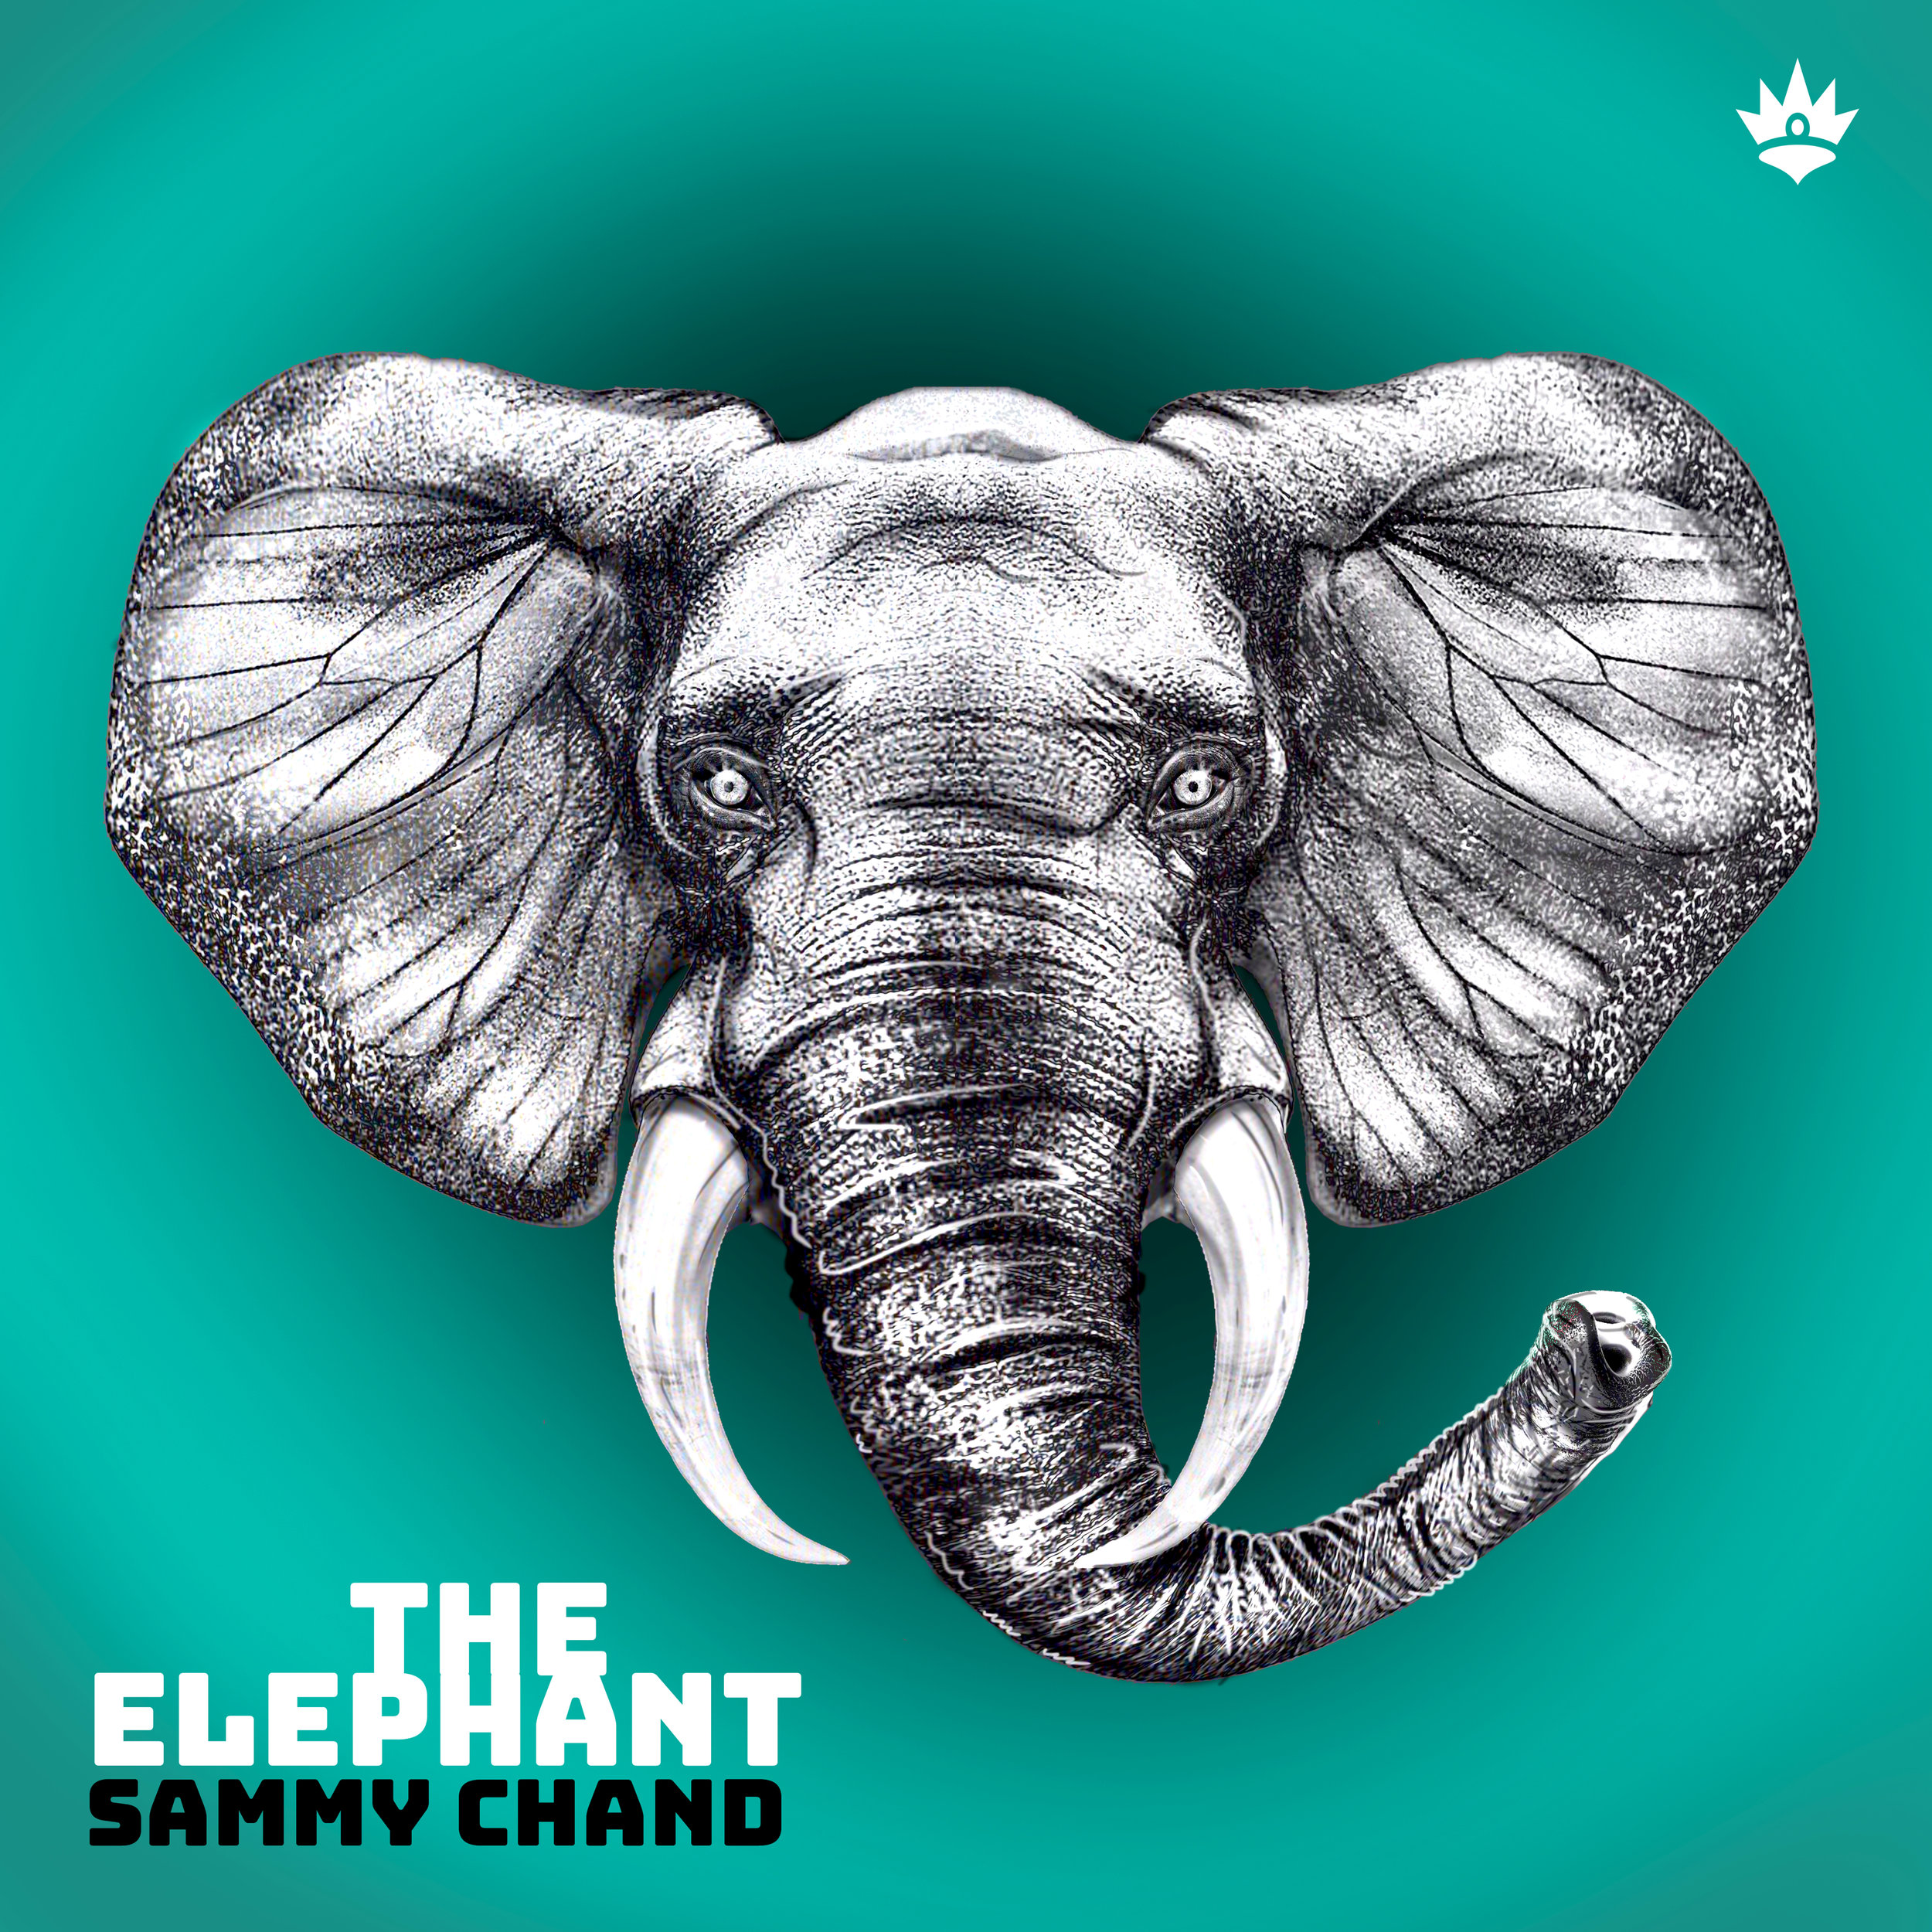 The elephant is mine. Elephant альбом. Elephant обложка альбома. Слон слушает музыку. Альбом слон в круге.